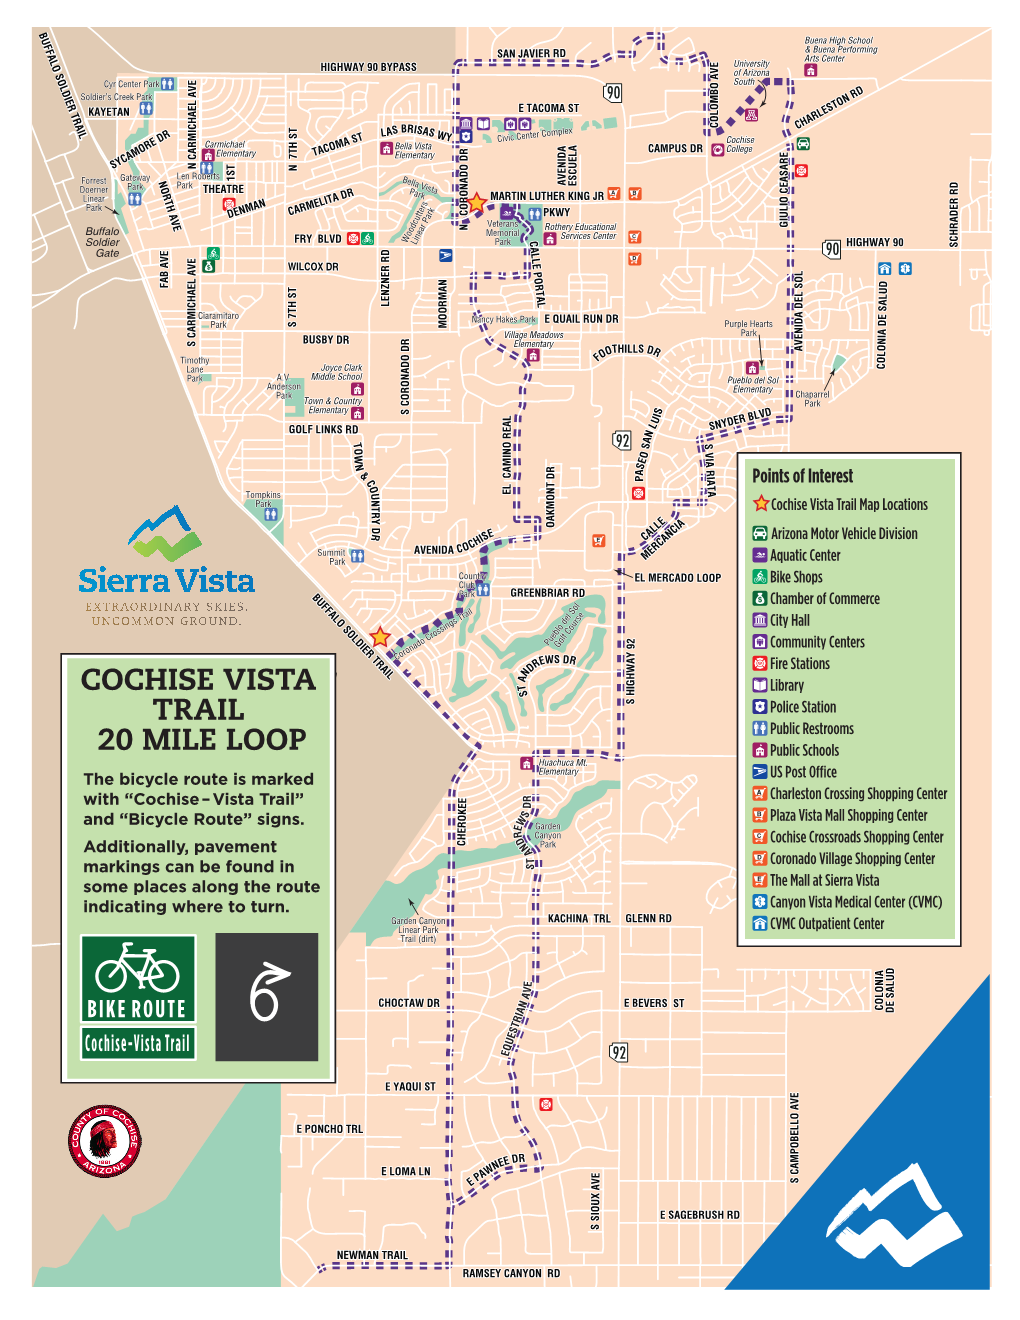 Cochise Vista Trail Map Locations